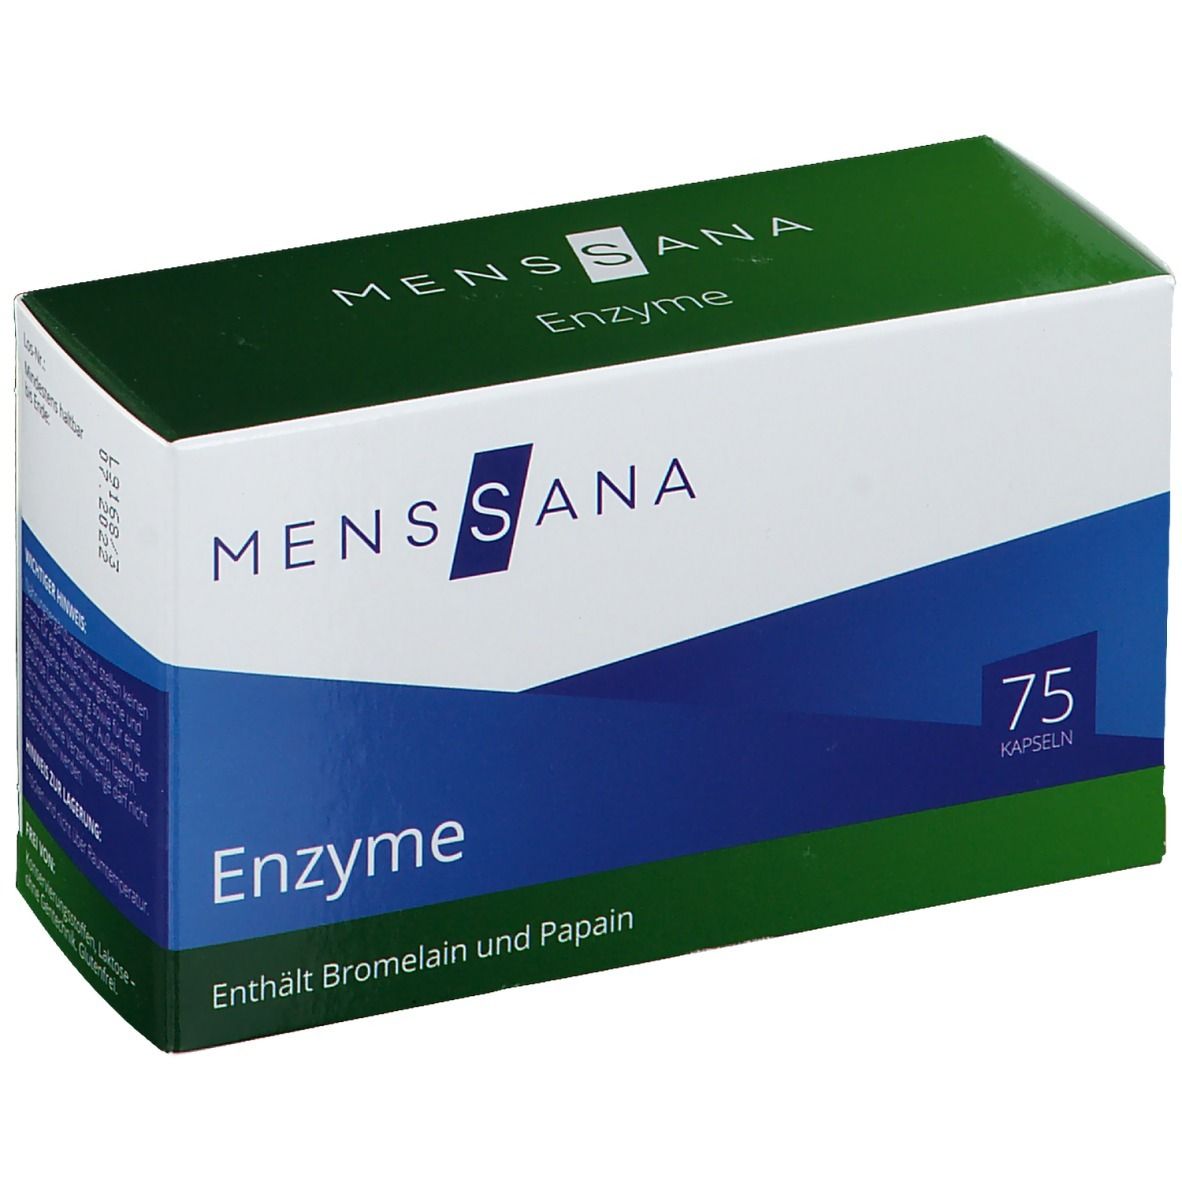 MensSana Enzyme